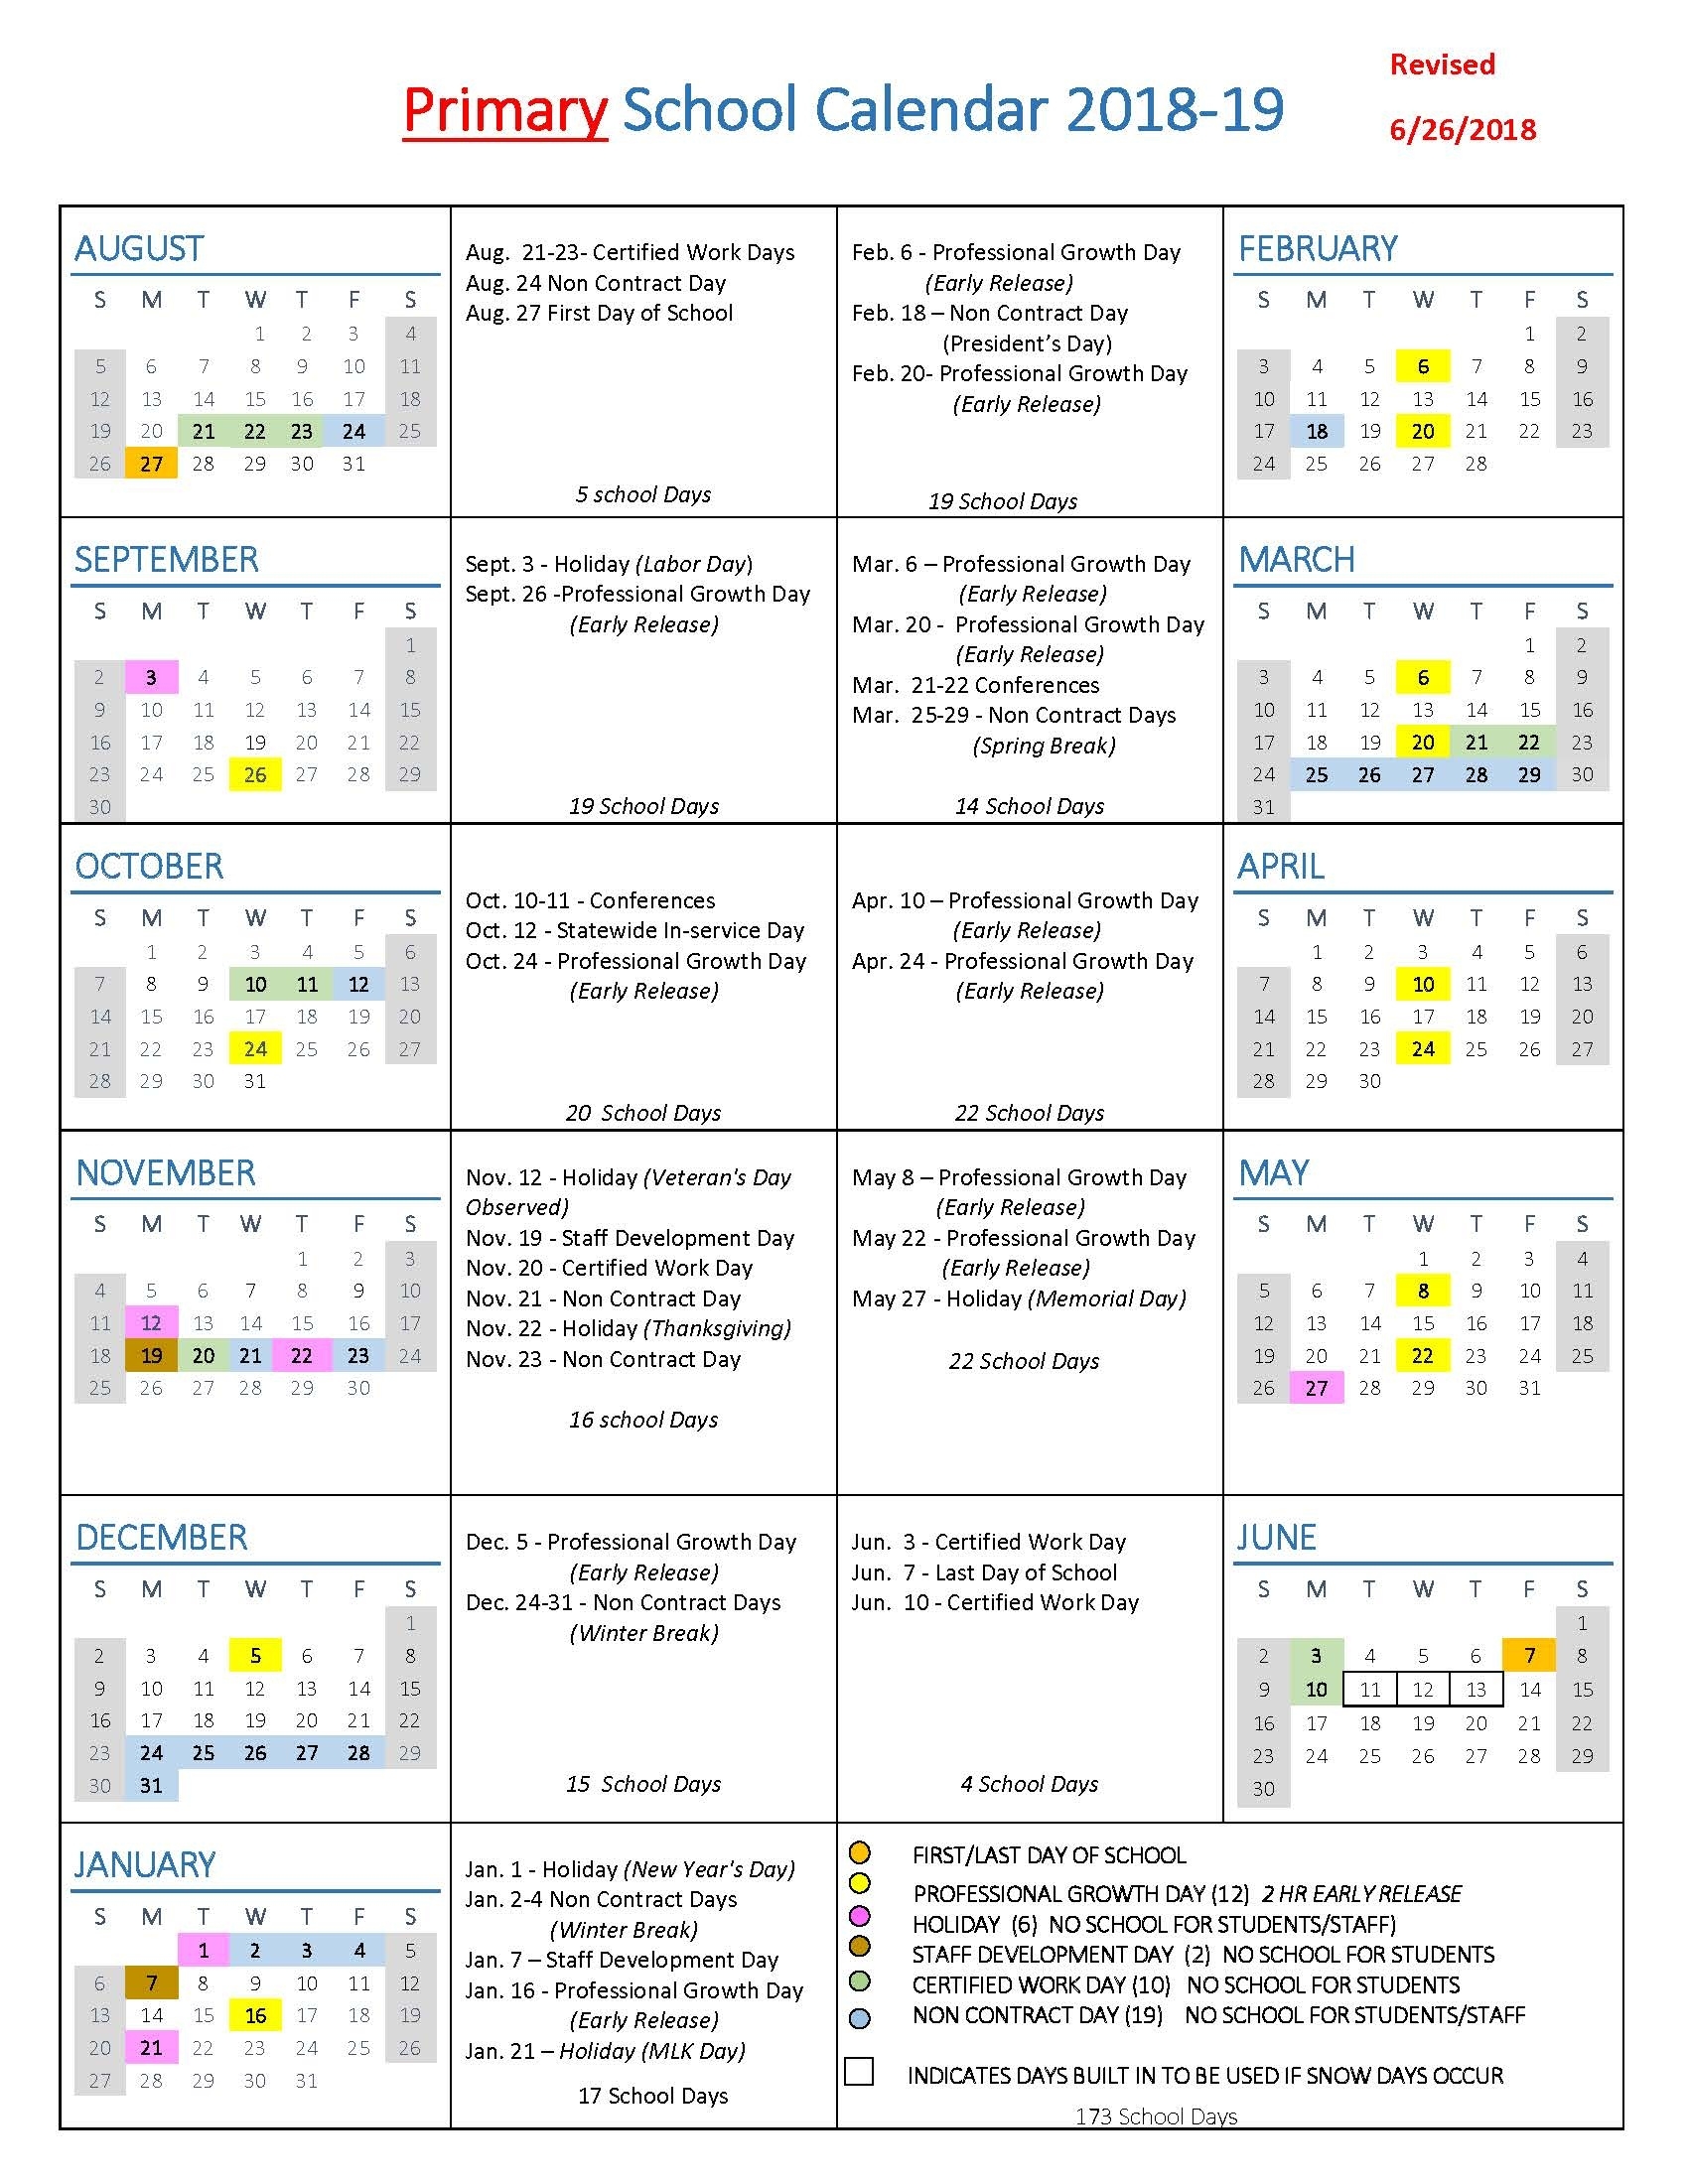 School Year Calendars / School Year Calendars Ps 8 School Calendar